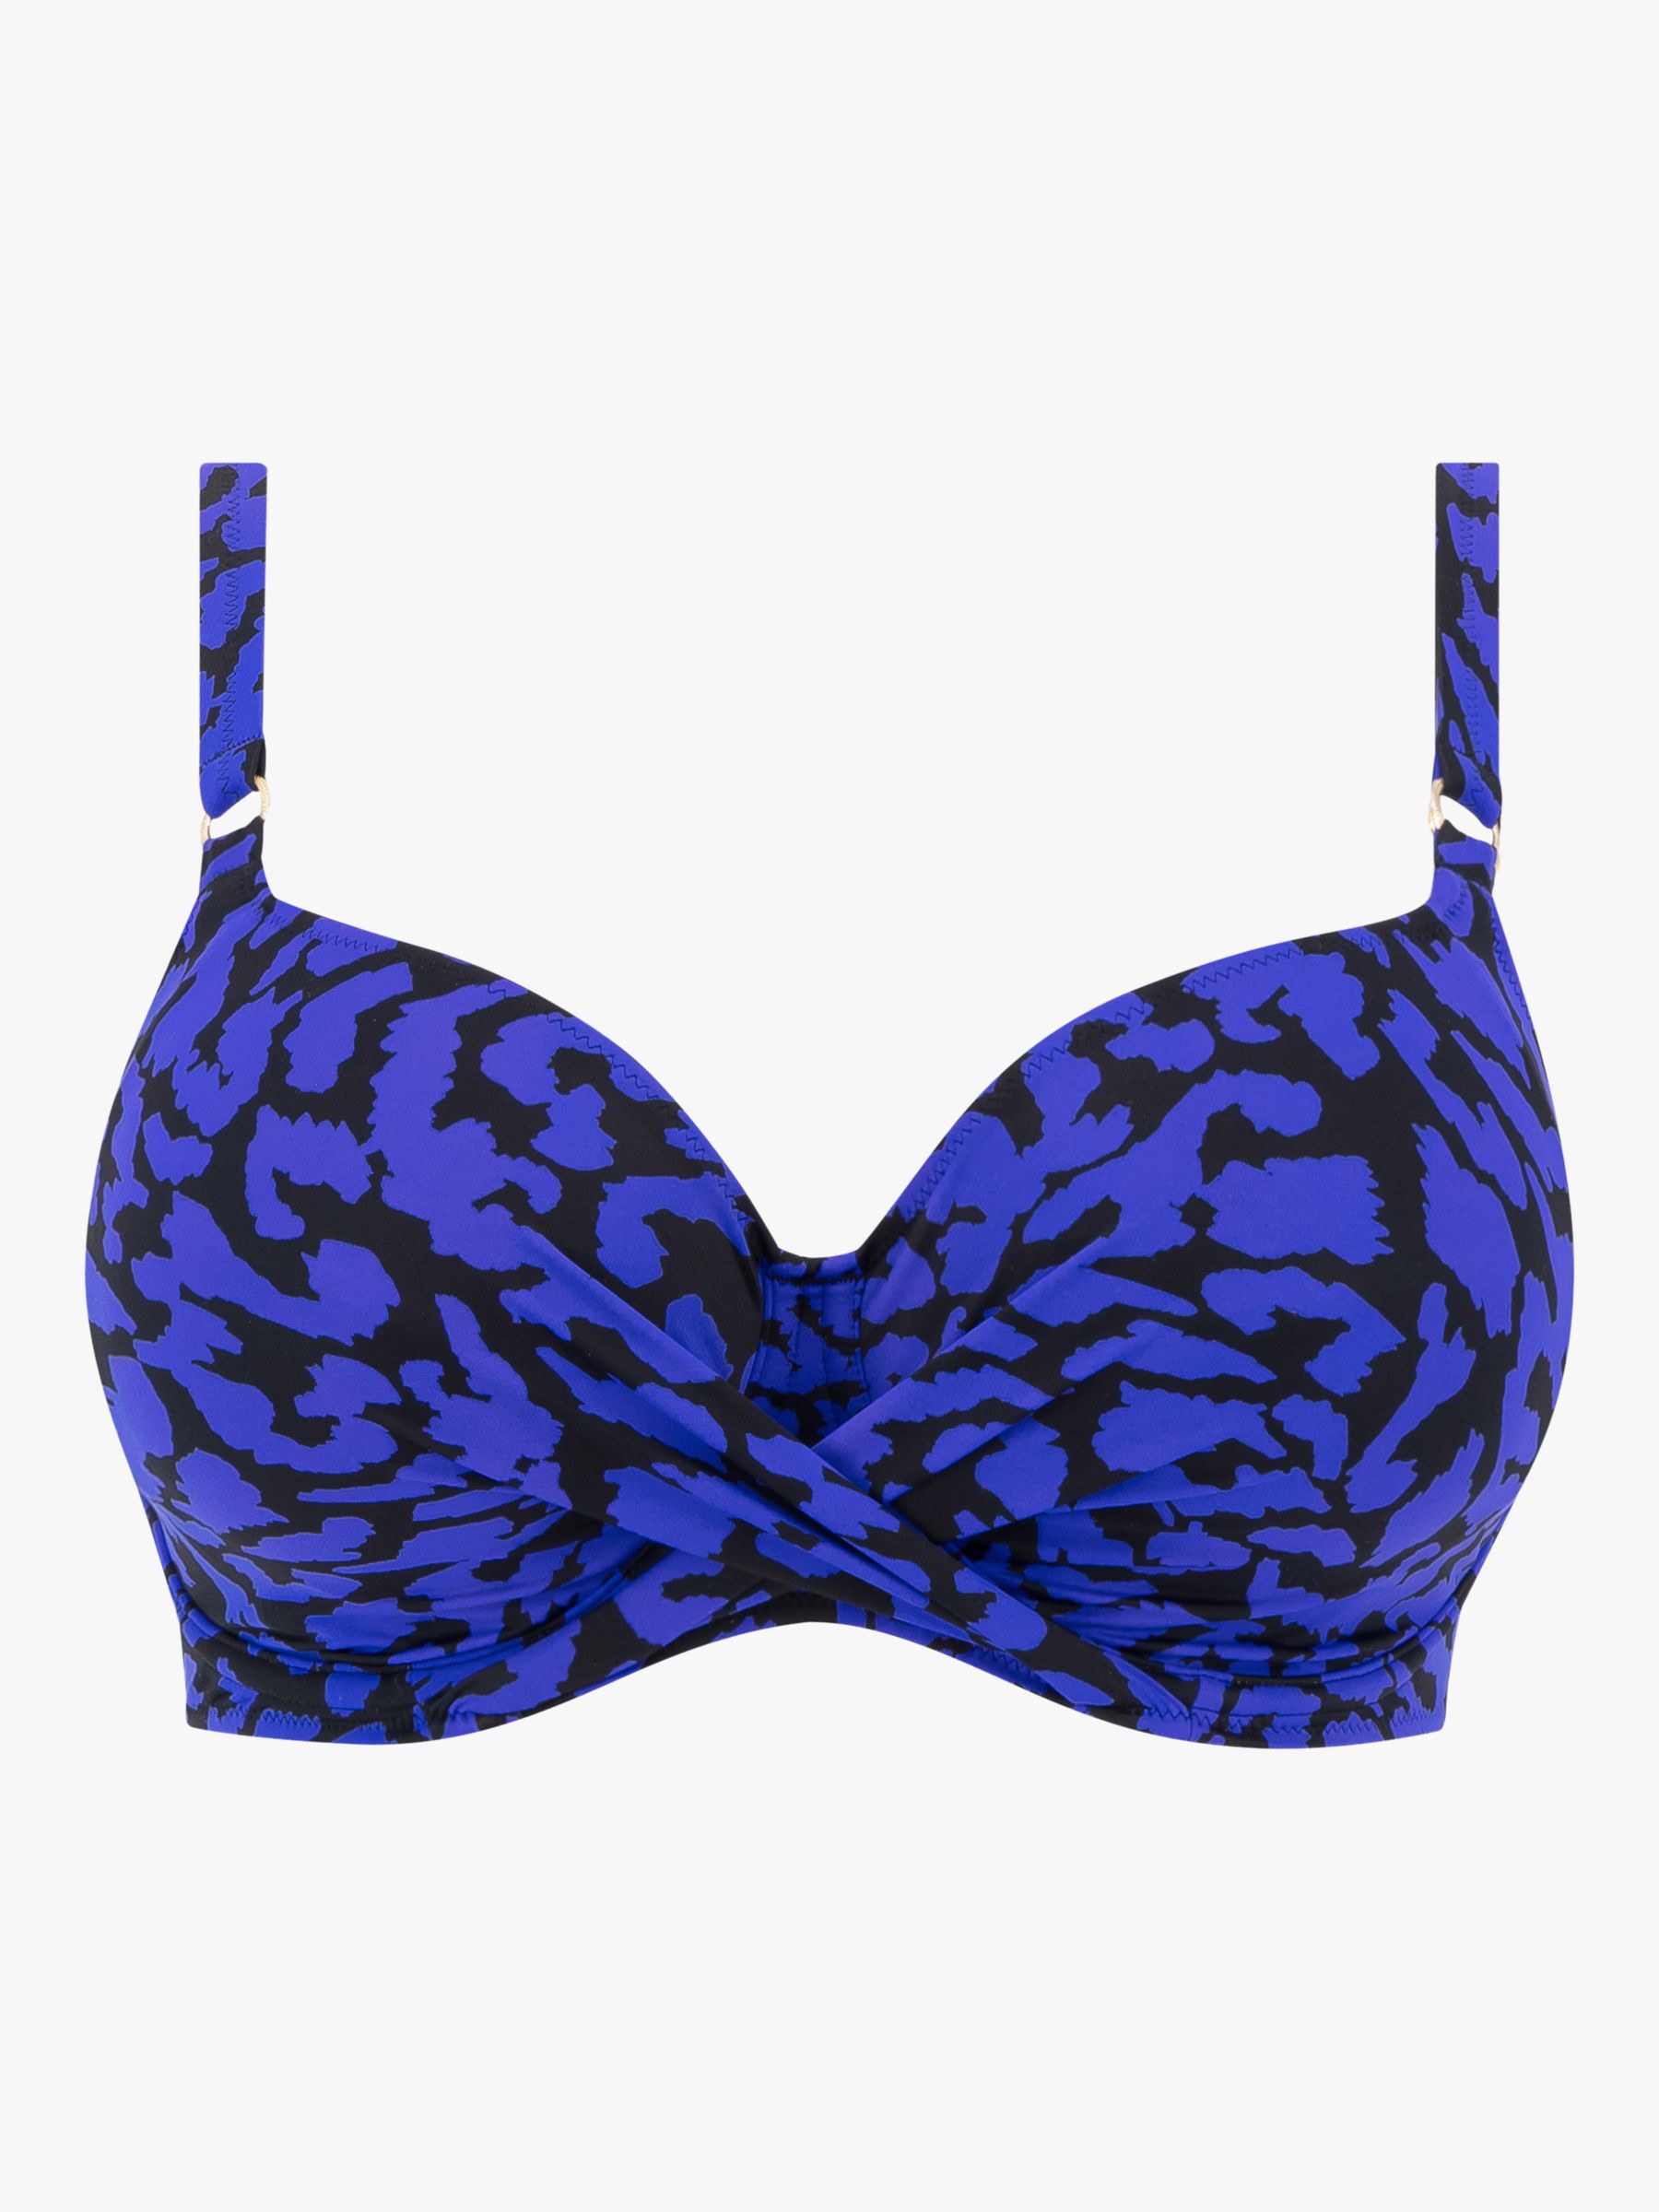 Fantasie Hope Bay Underwired Full Cup Bikini Top, Black/Blue, 32DD